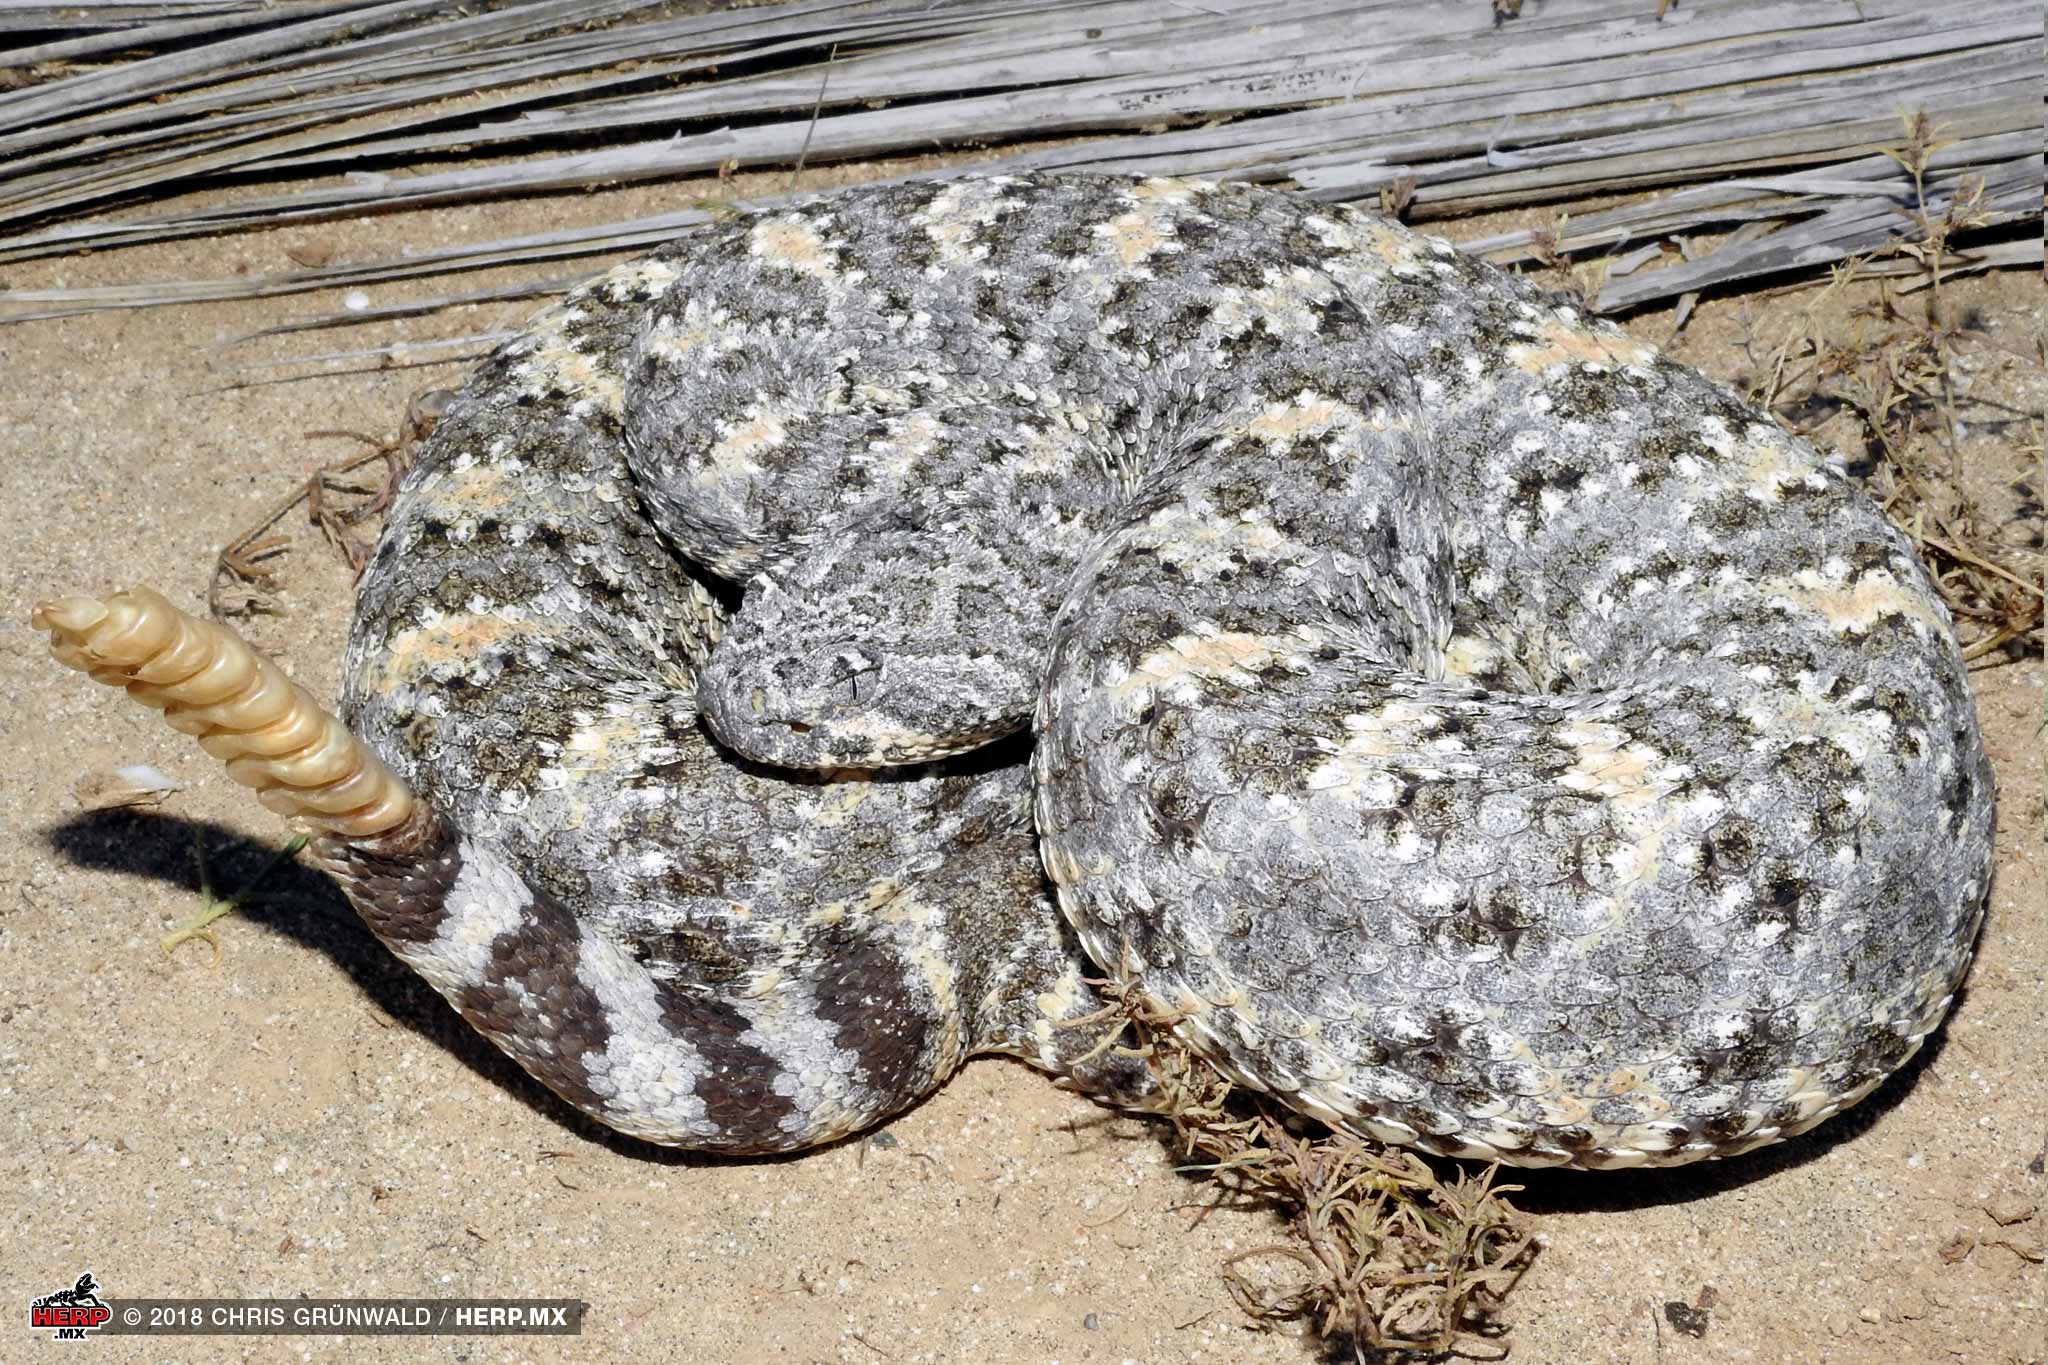 Speckled Rattlesnake (Crotalus mitchelli) © Chris Grünwald / HERP.MX